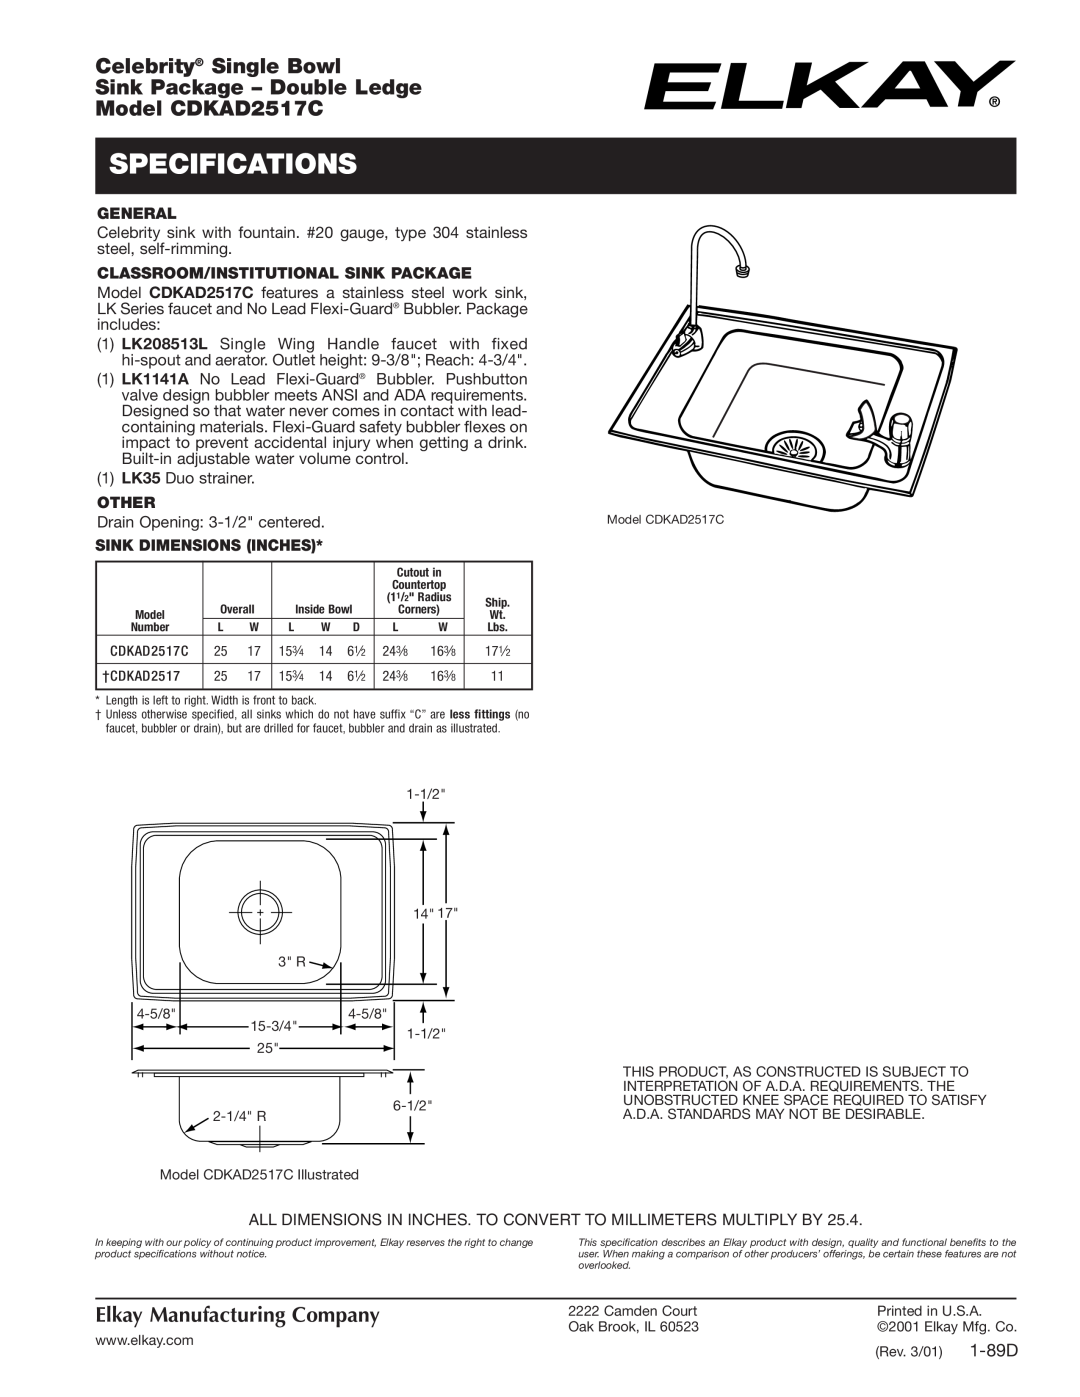 Elkay specifications Specifications, Celebrity Single Bowl Sink Package - Double Ledge, Model CDKAD2517C, General 